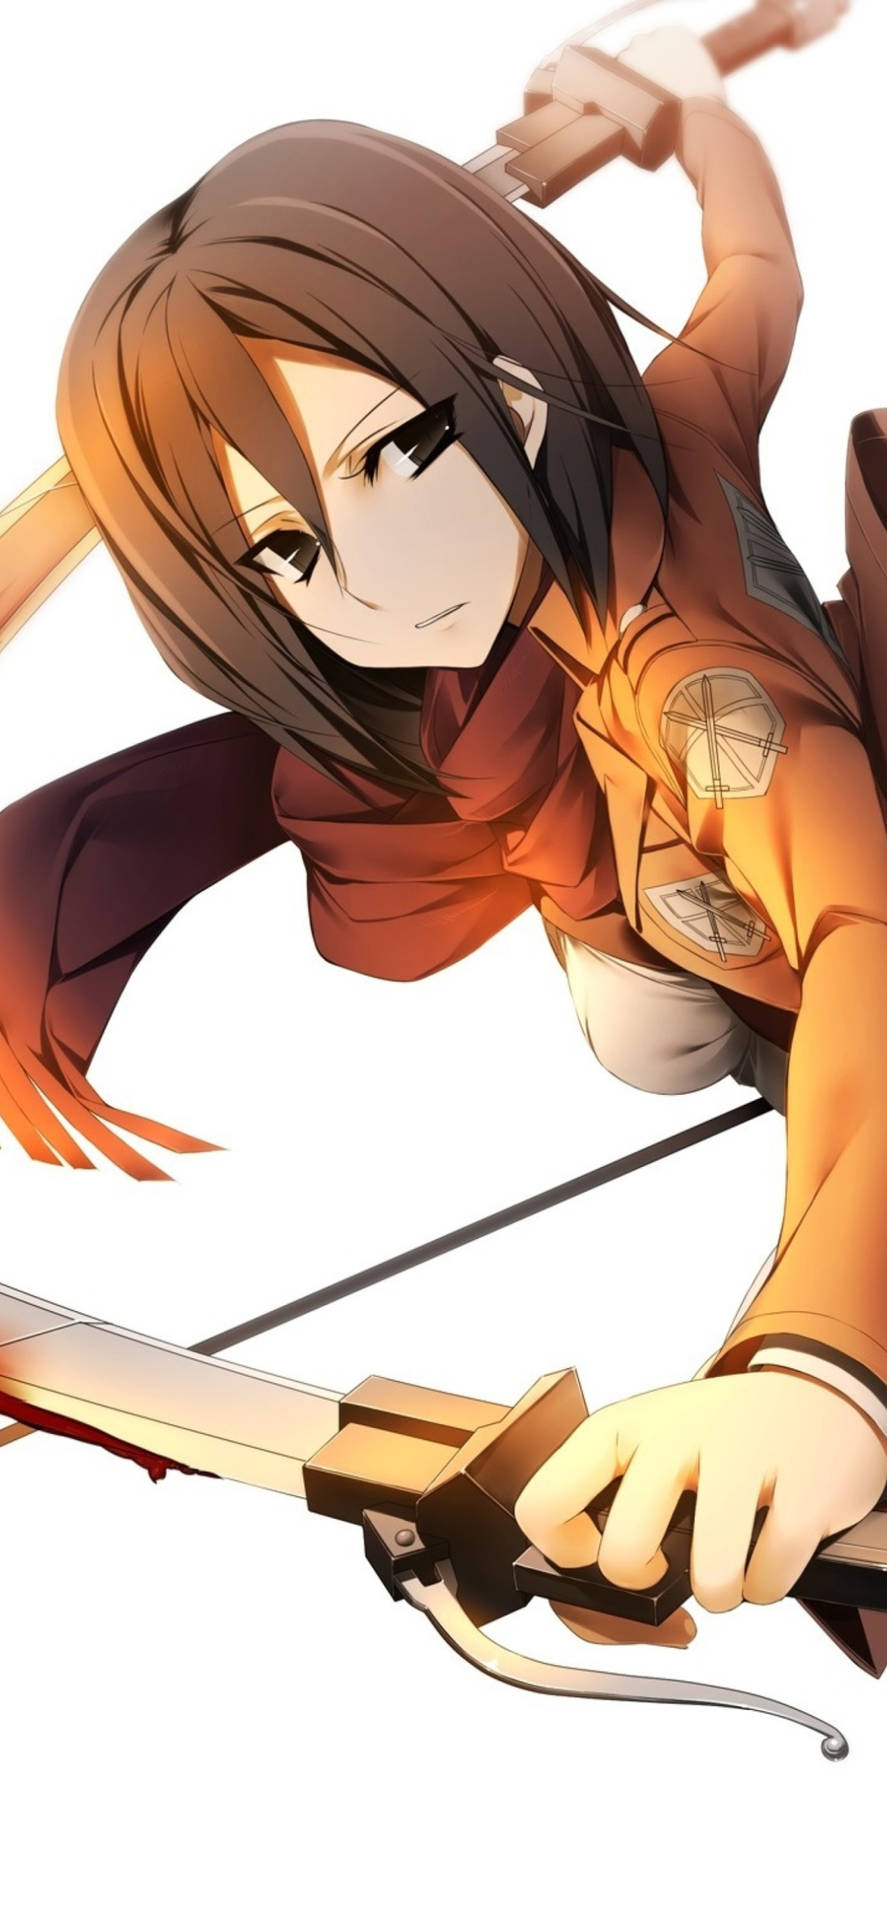 Mikasa Cute Fight Position Wallpaper